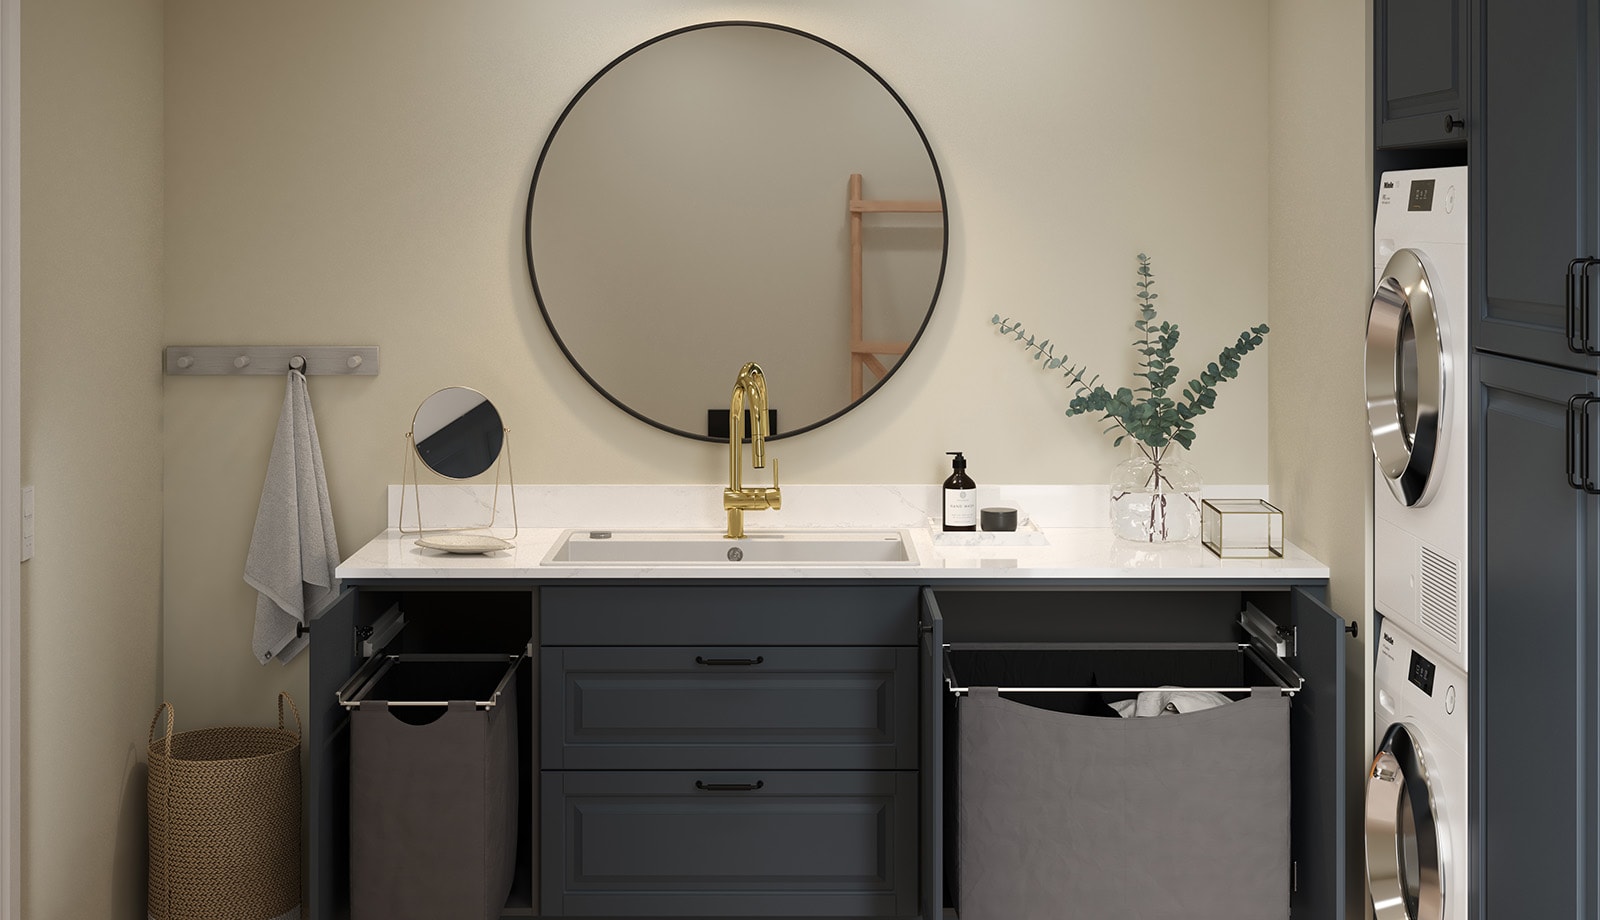 EPOQ Heritage Bluegrey laundry Room - round mirror - eucalyptus - Miele washer dryer column - Silestone Quartz Calacatta Gold